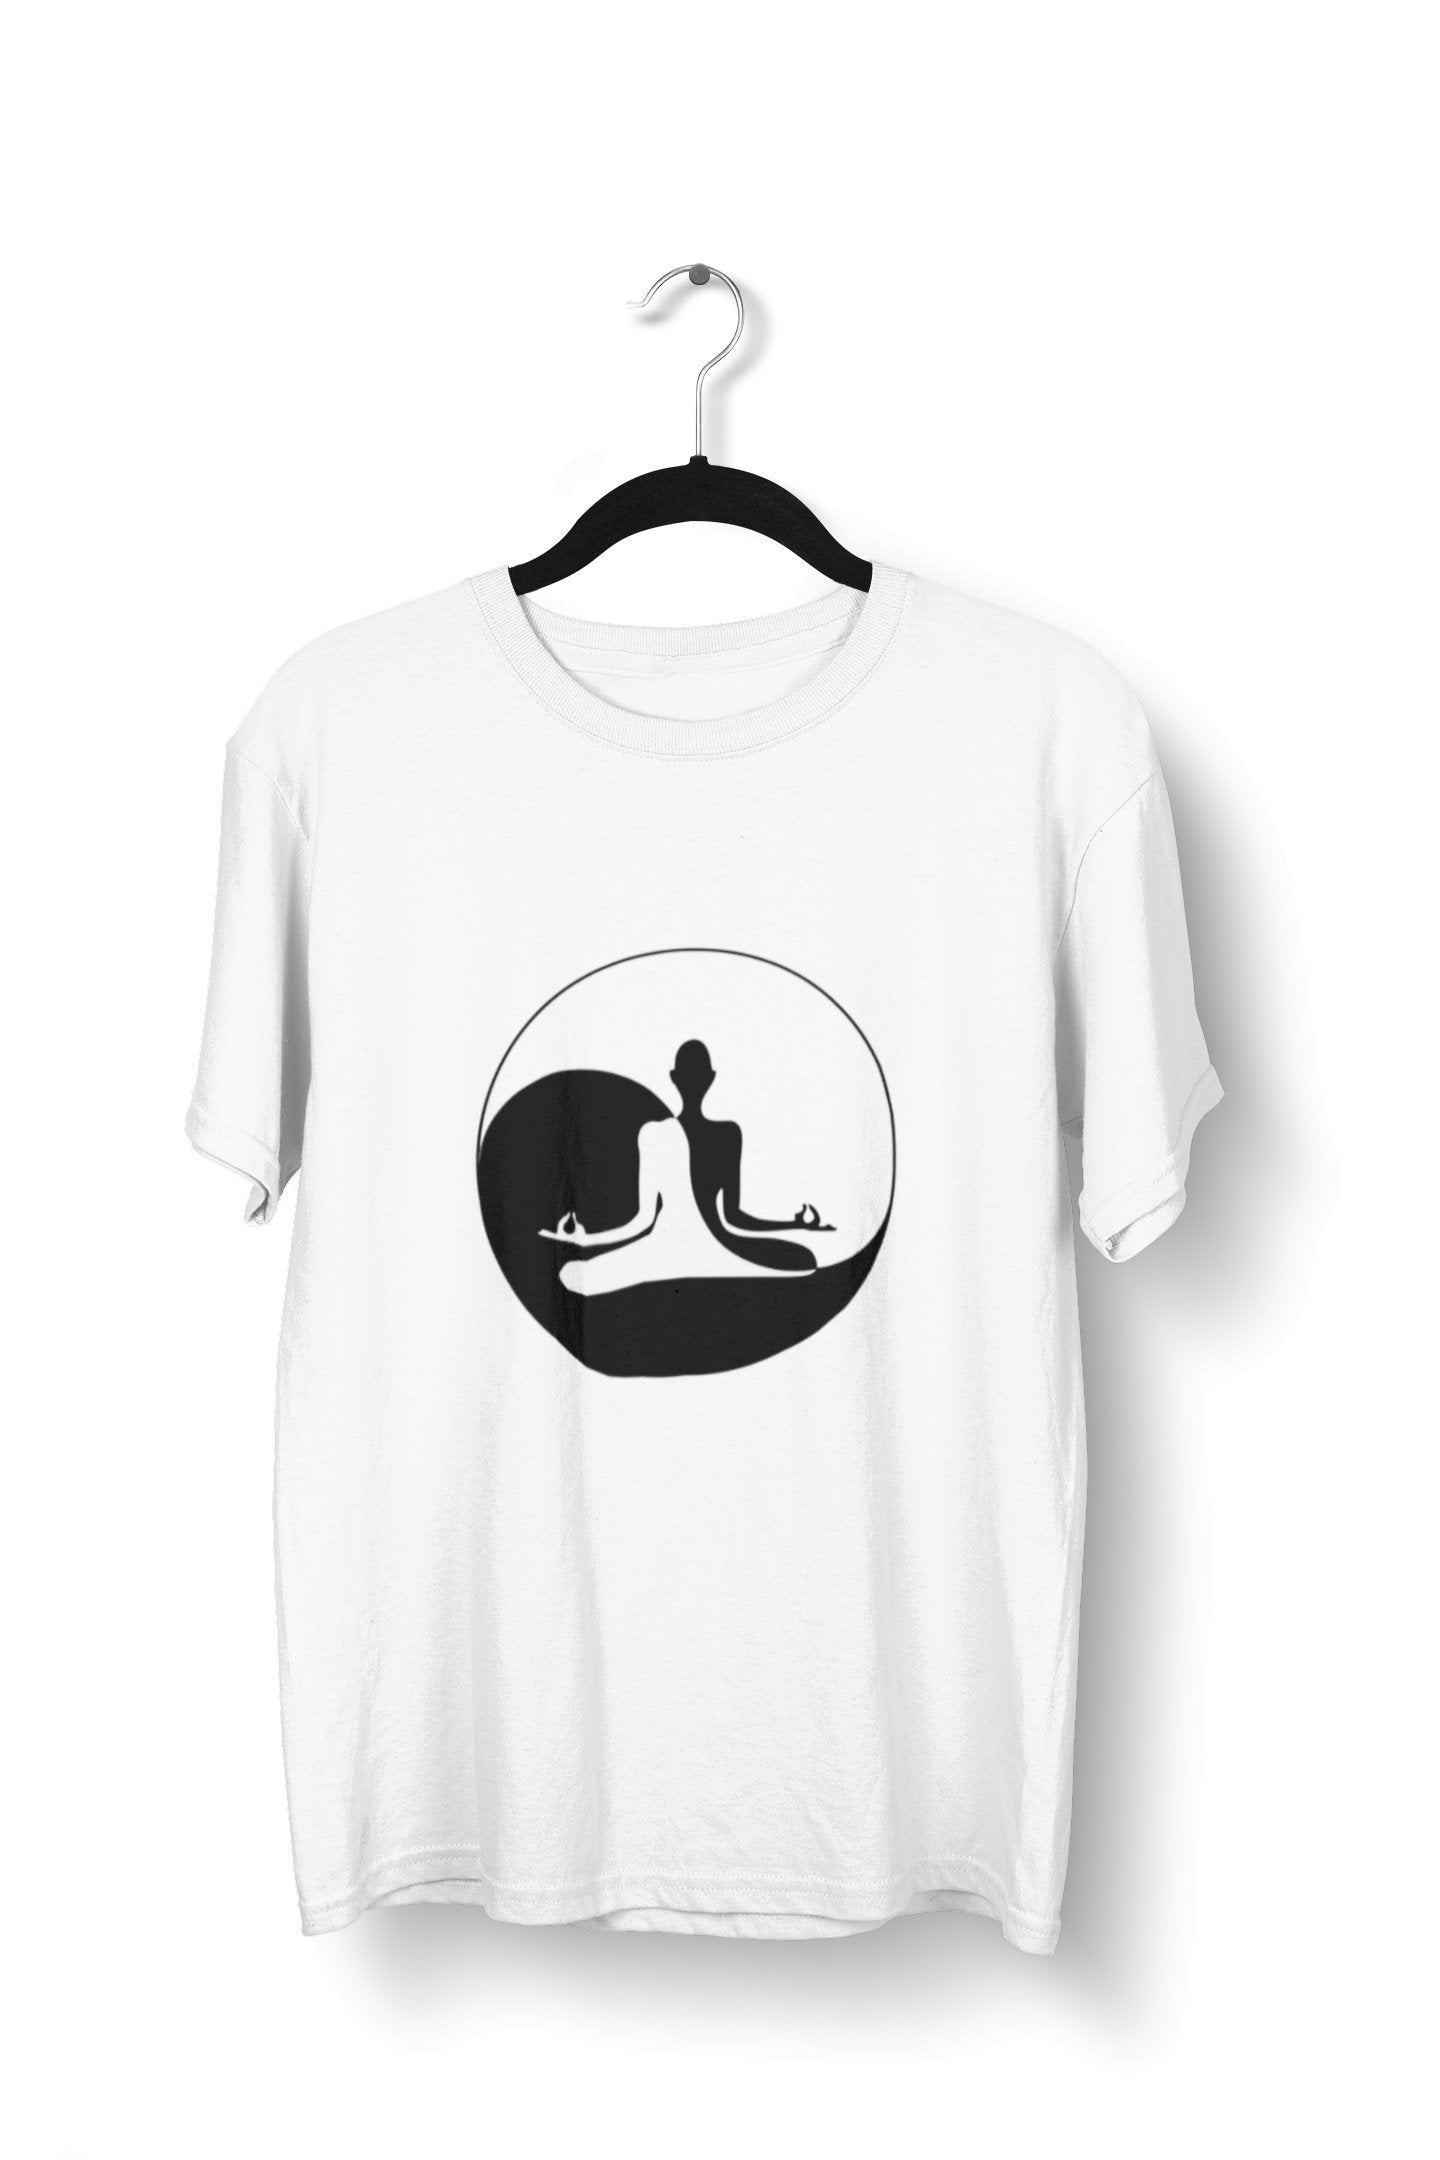 thelegalgang,Ying Yang Graphic Printed Yoga T-Shirt for Men,.